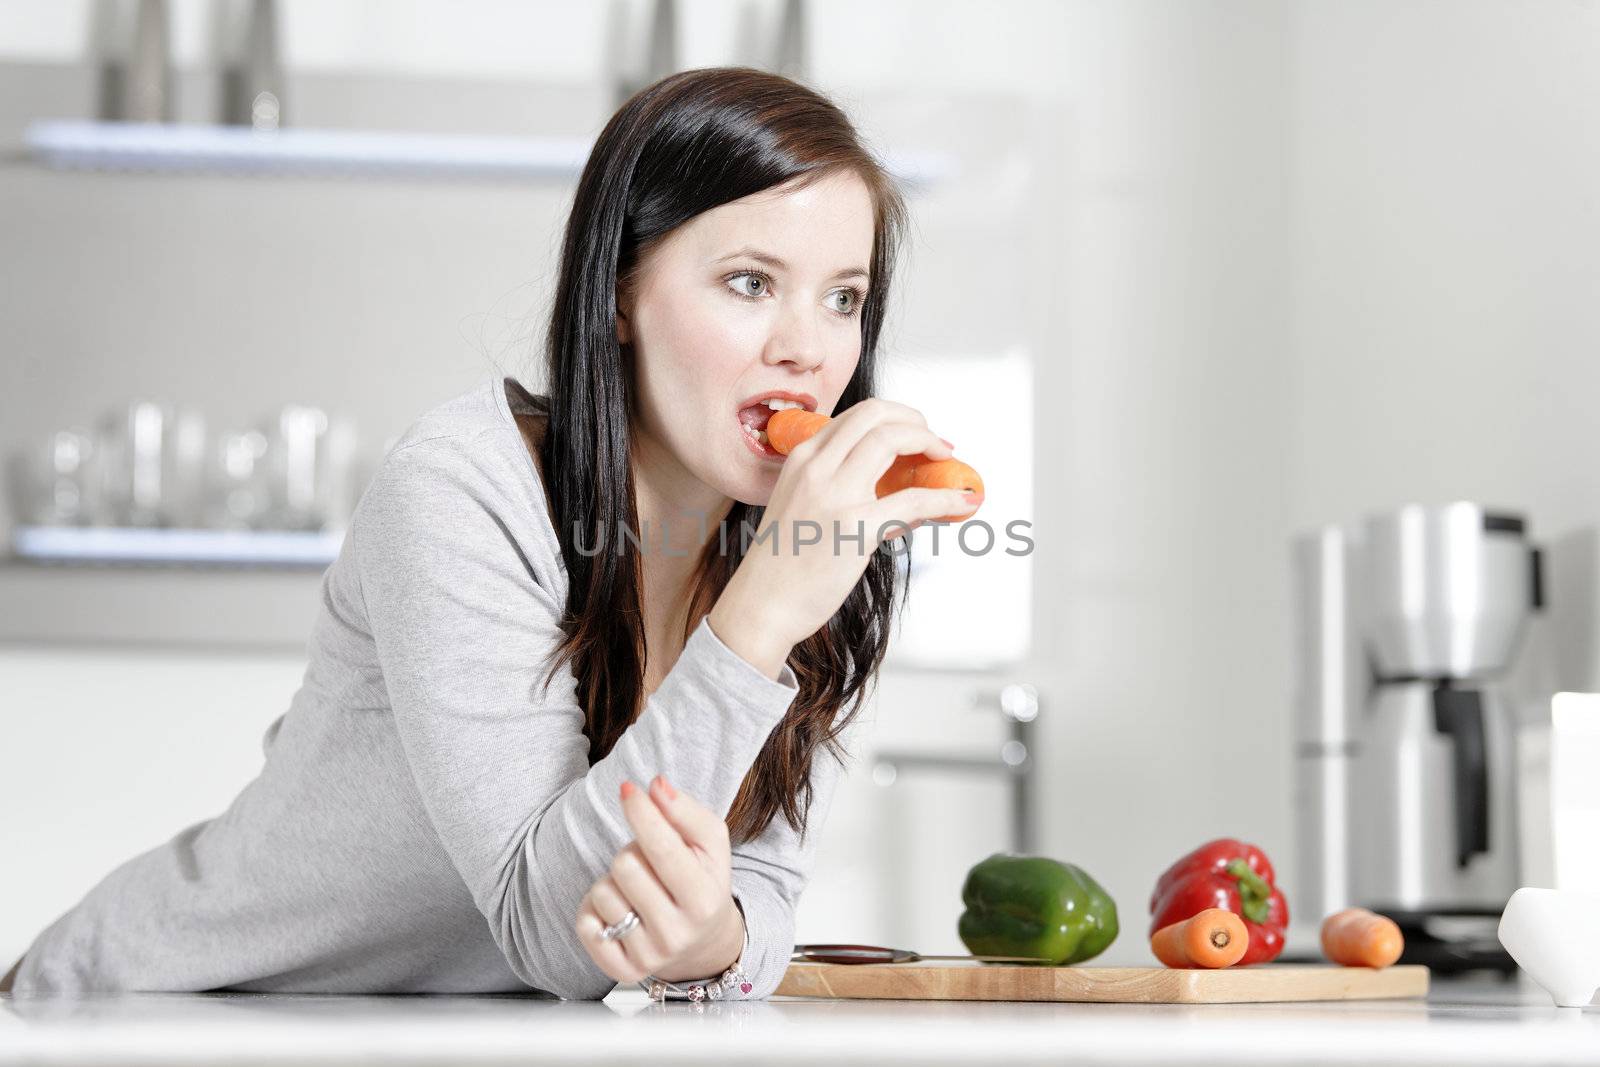 Woman eating a carrot by studiofi